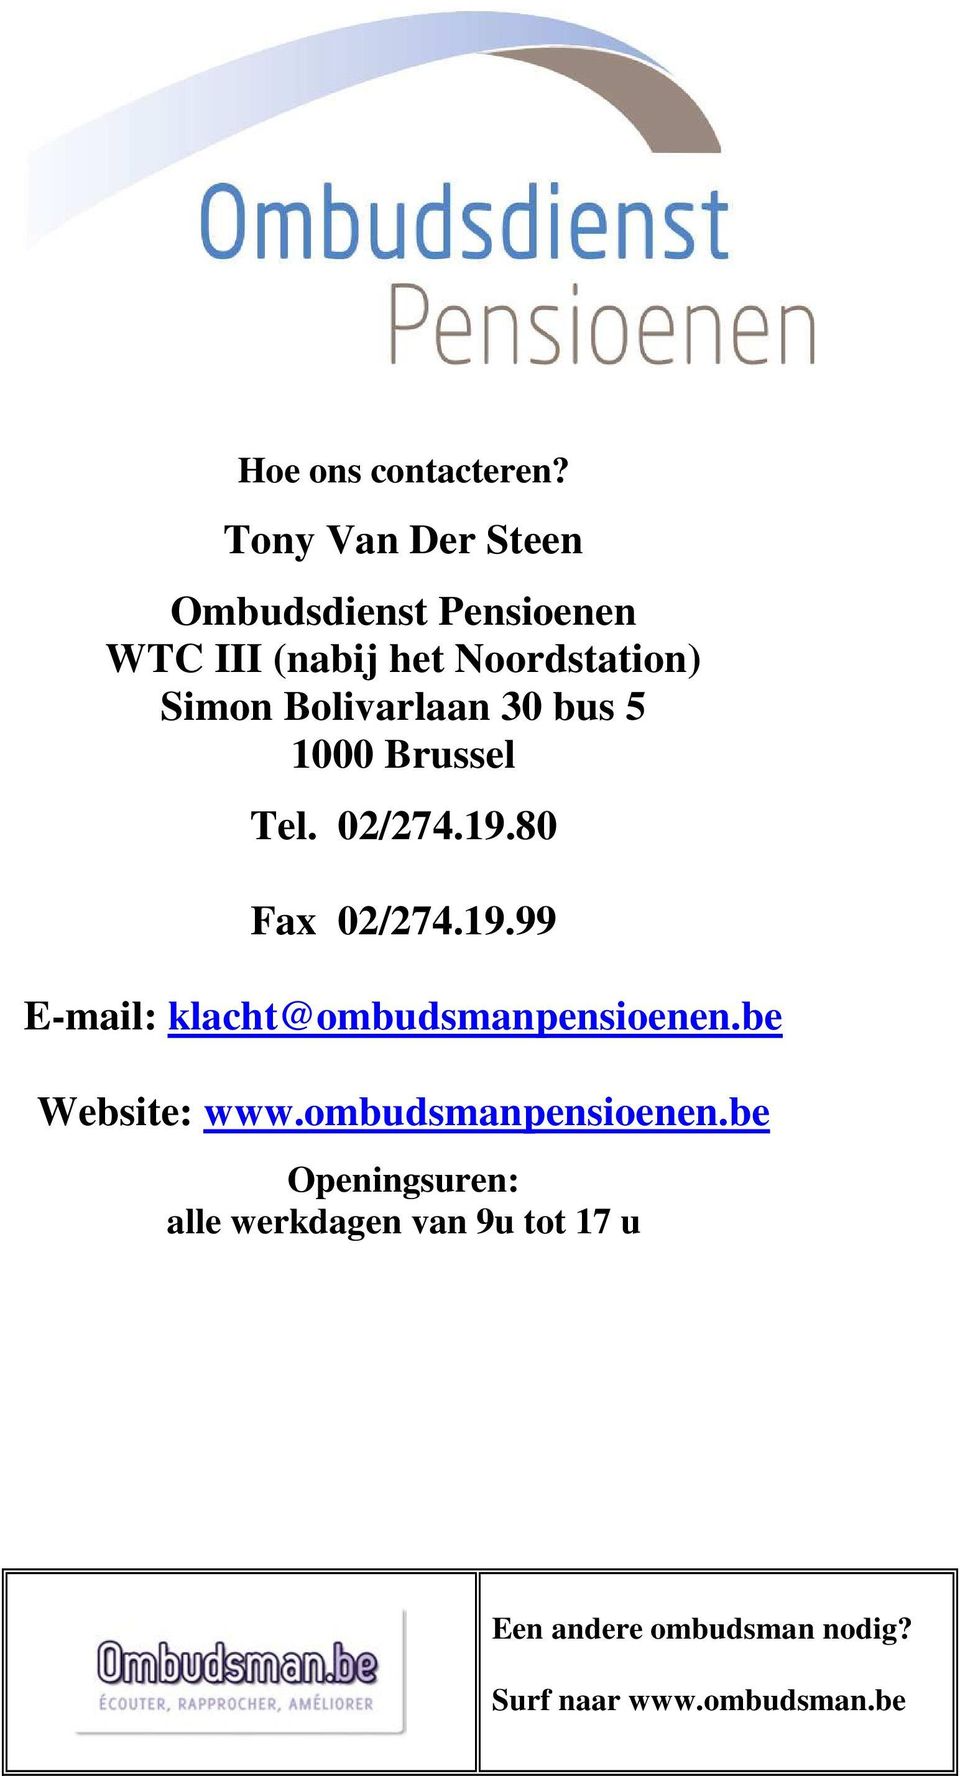 Bolivarlaan 30 bus 5 1000 Brussel Tel. 02/274.19.80 Fax 02/274.19.99 E-mail: klacht@ombudsmanpensioenen.